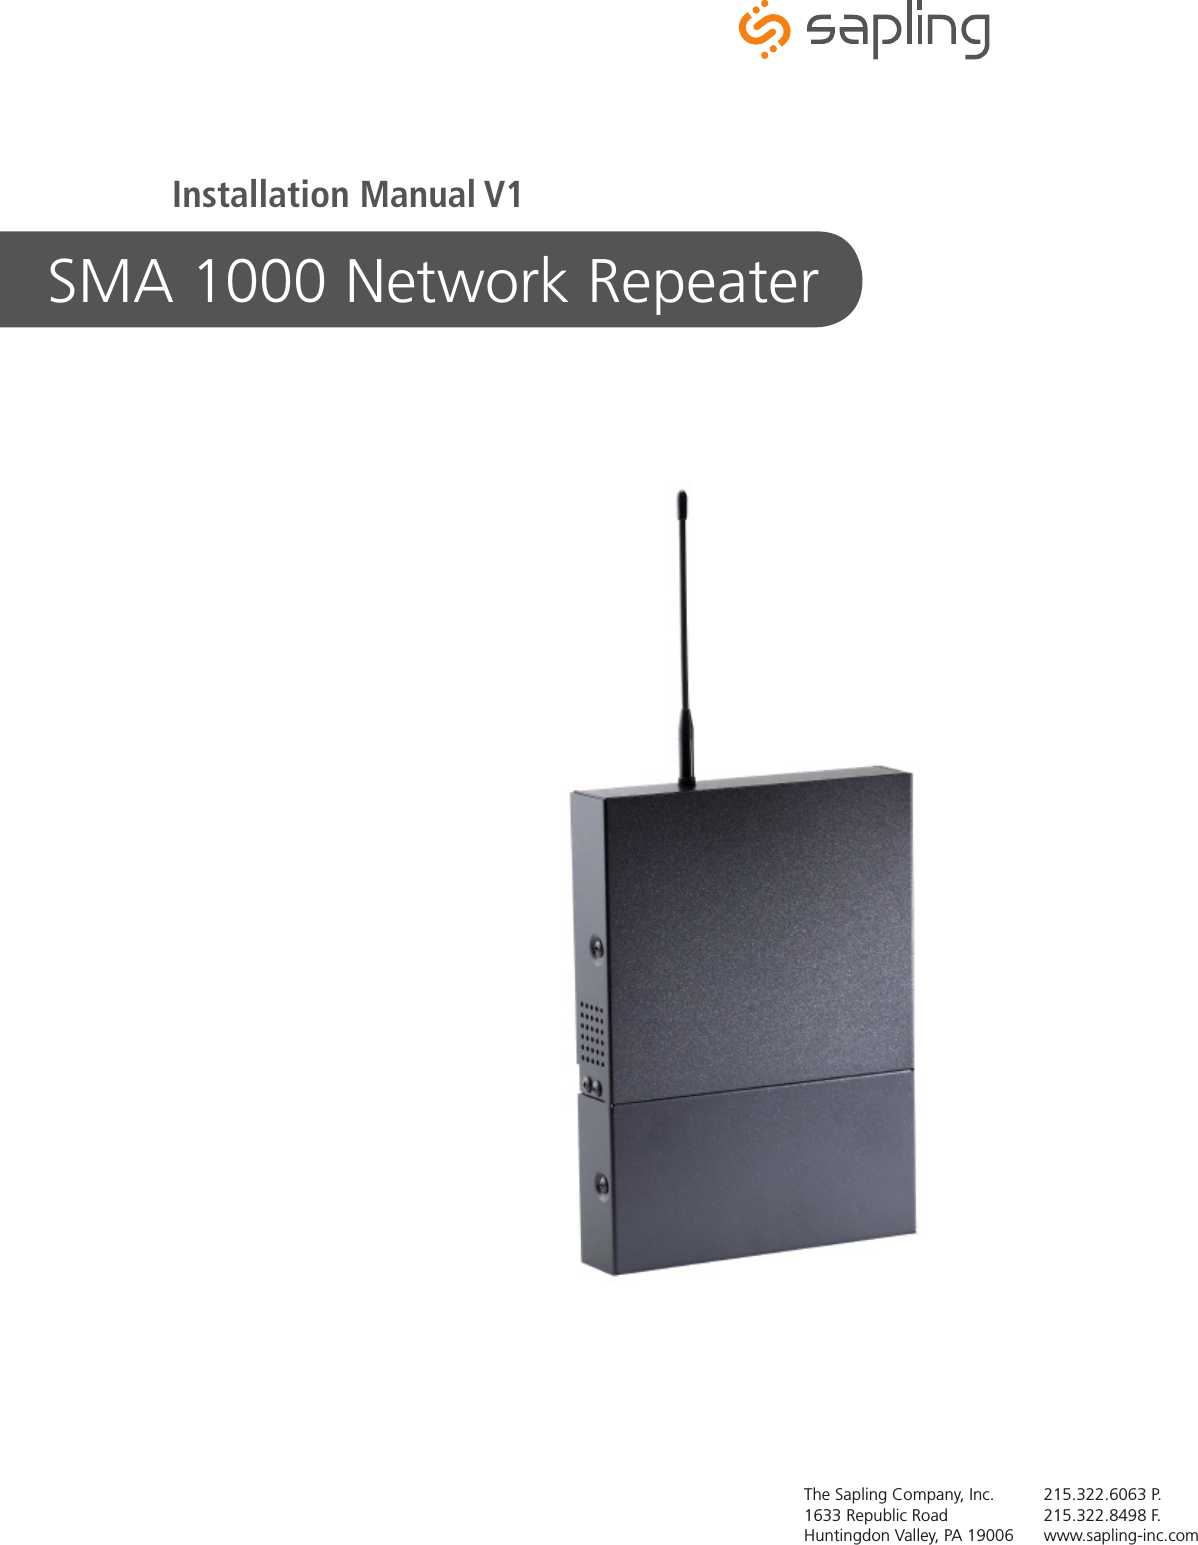 SMA 1000 Network RepeaterThe Sapling Company, Inc.1633 Republic RoadHuntingdon Valley, PA 19006215.322.6063 P.215.322.8498 F.www.sapling-inc.comInstallation Manual V1